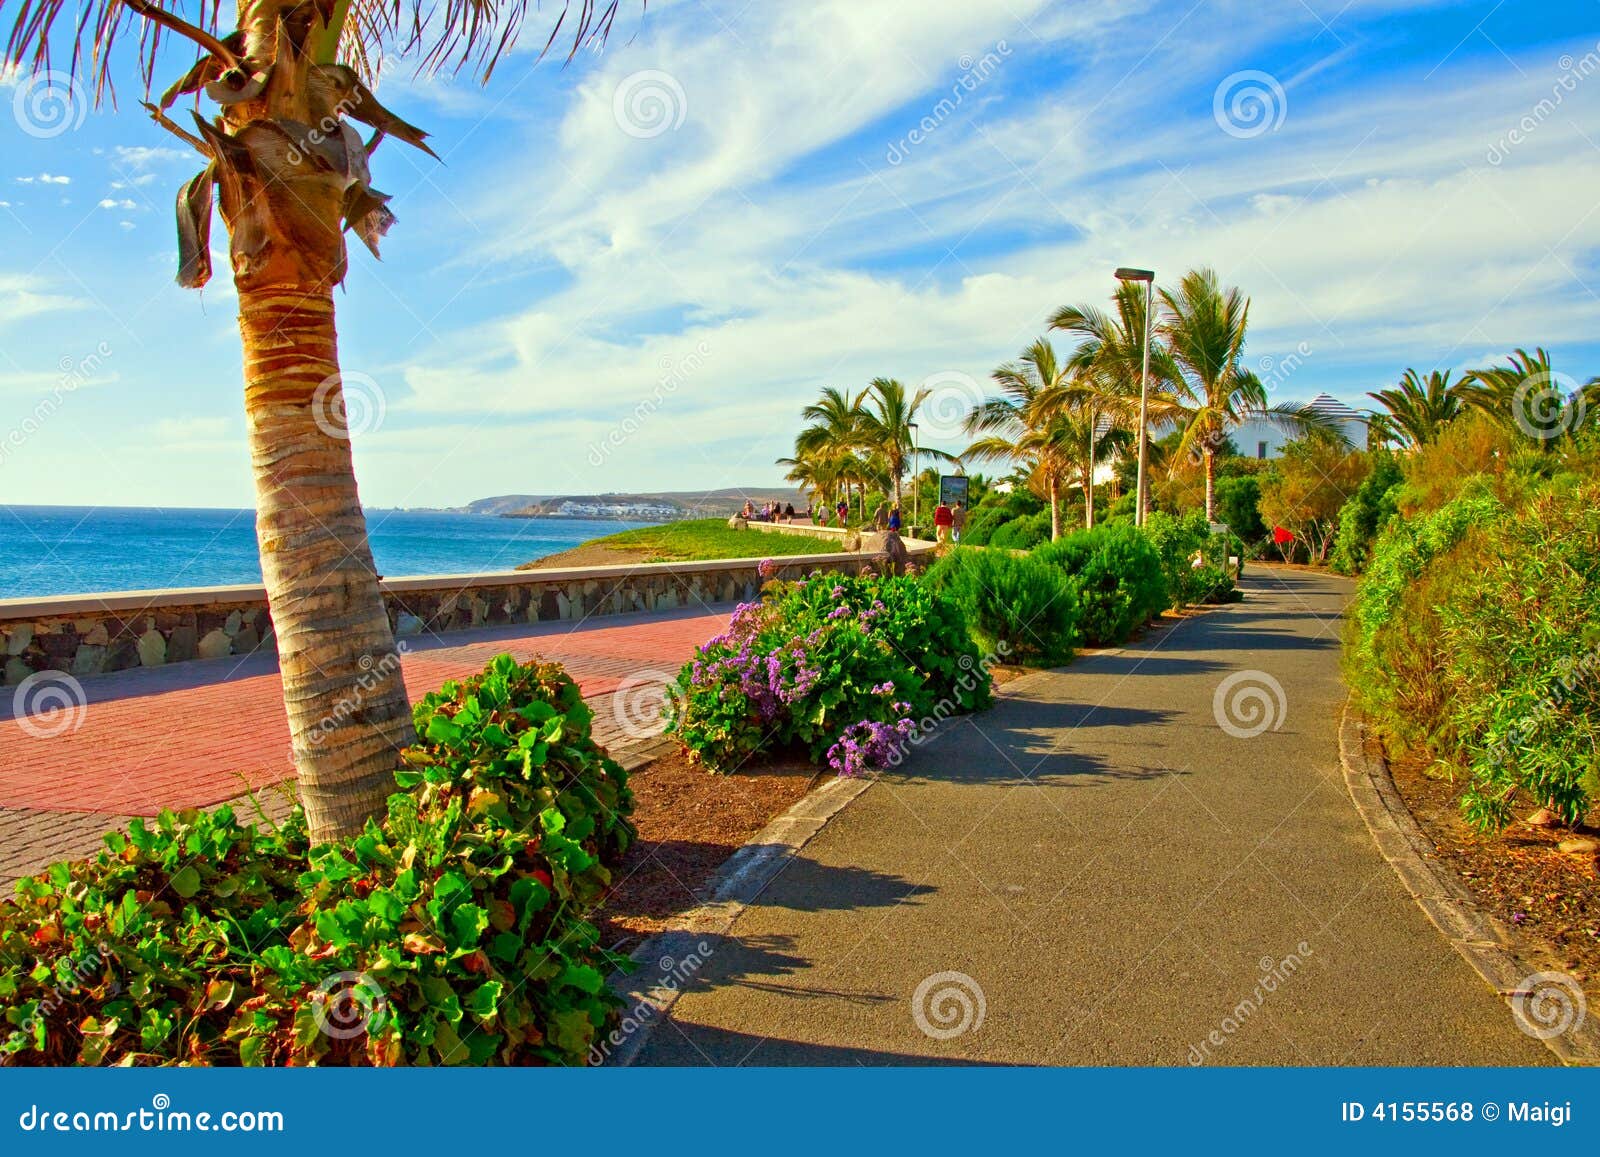 tropical beach promenade